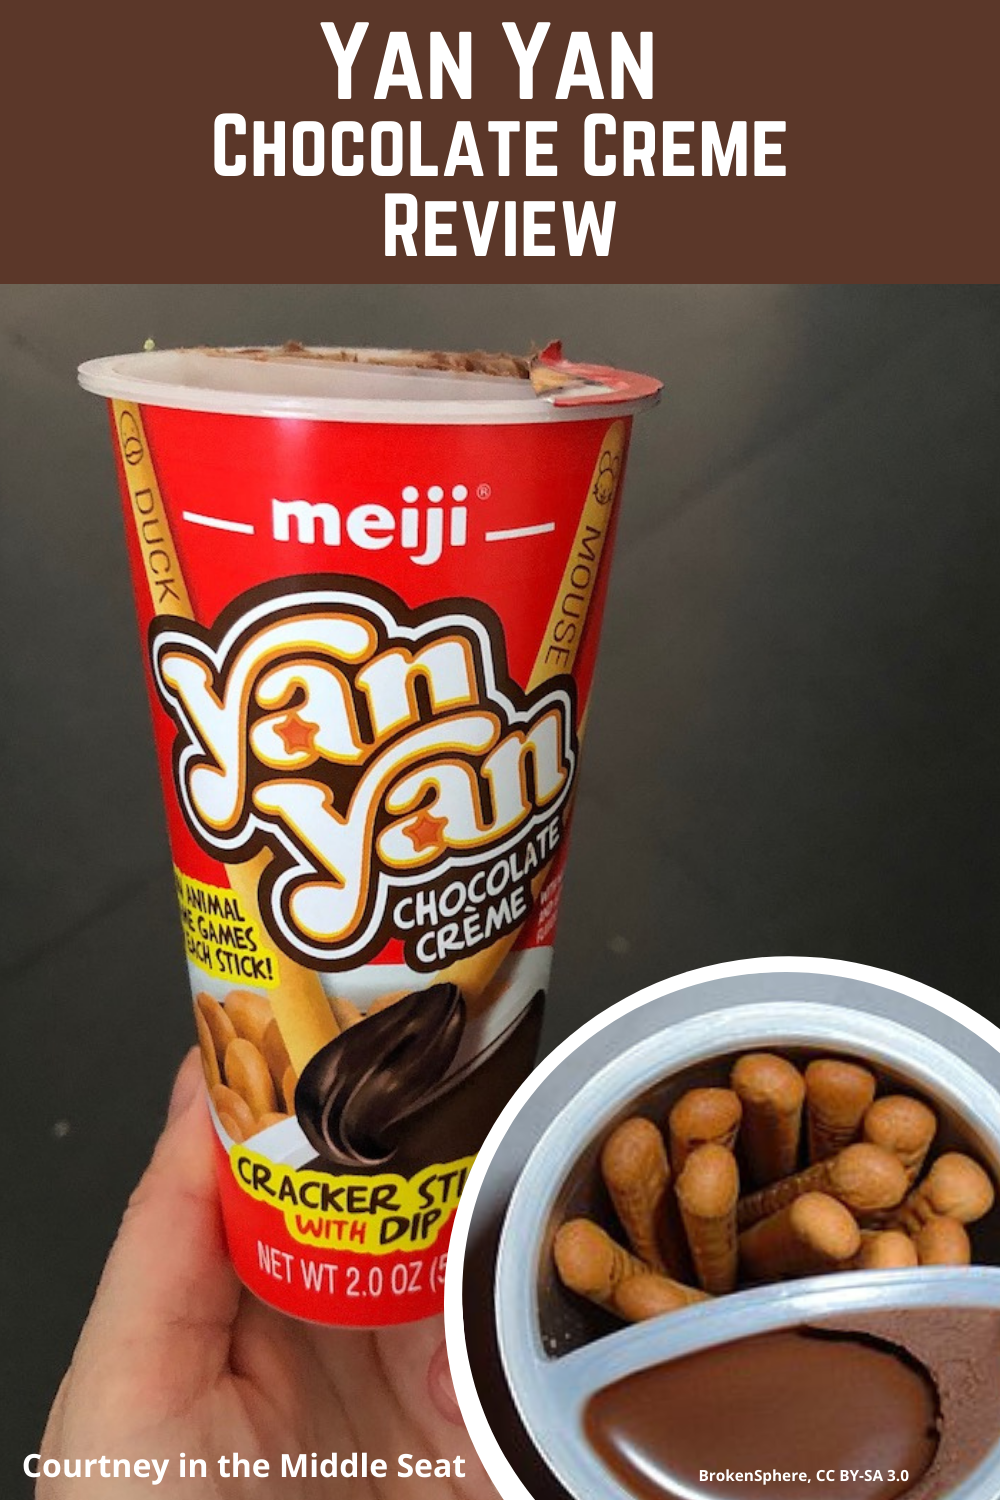 Yan Yan Chocolate Creme Snack Review Pinterest Pin